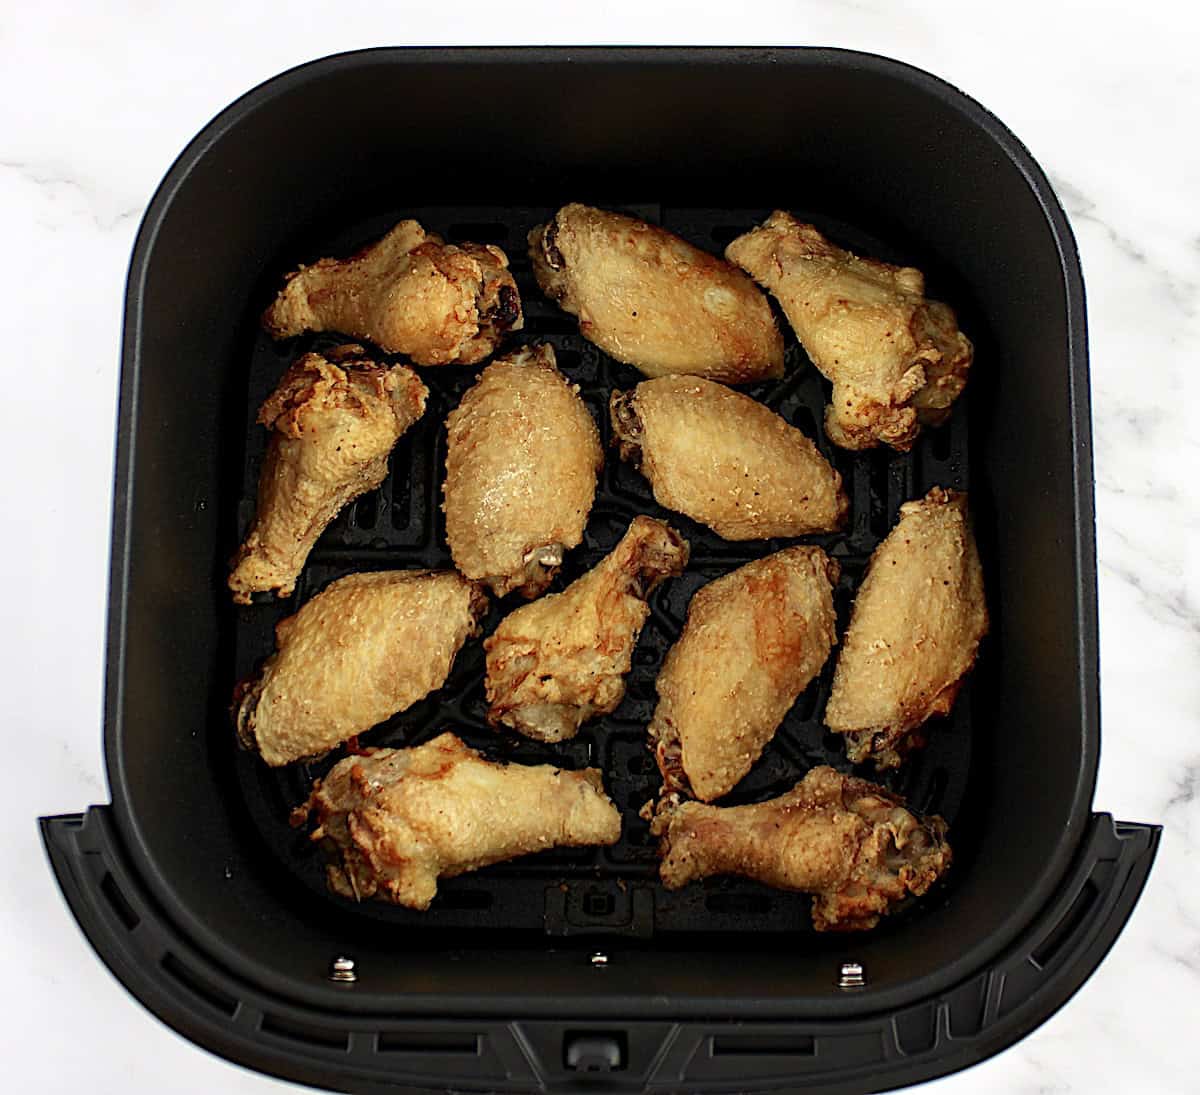 12 crispy chicken wings in air fryer basket